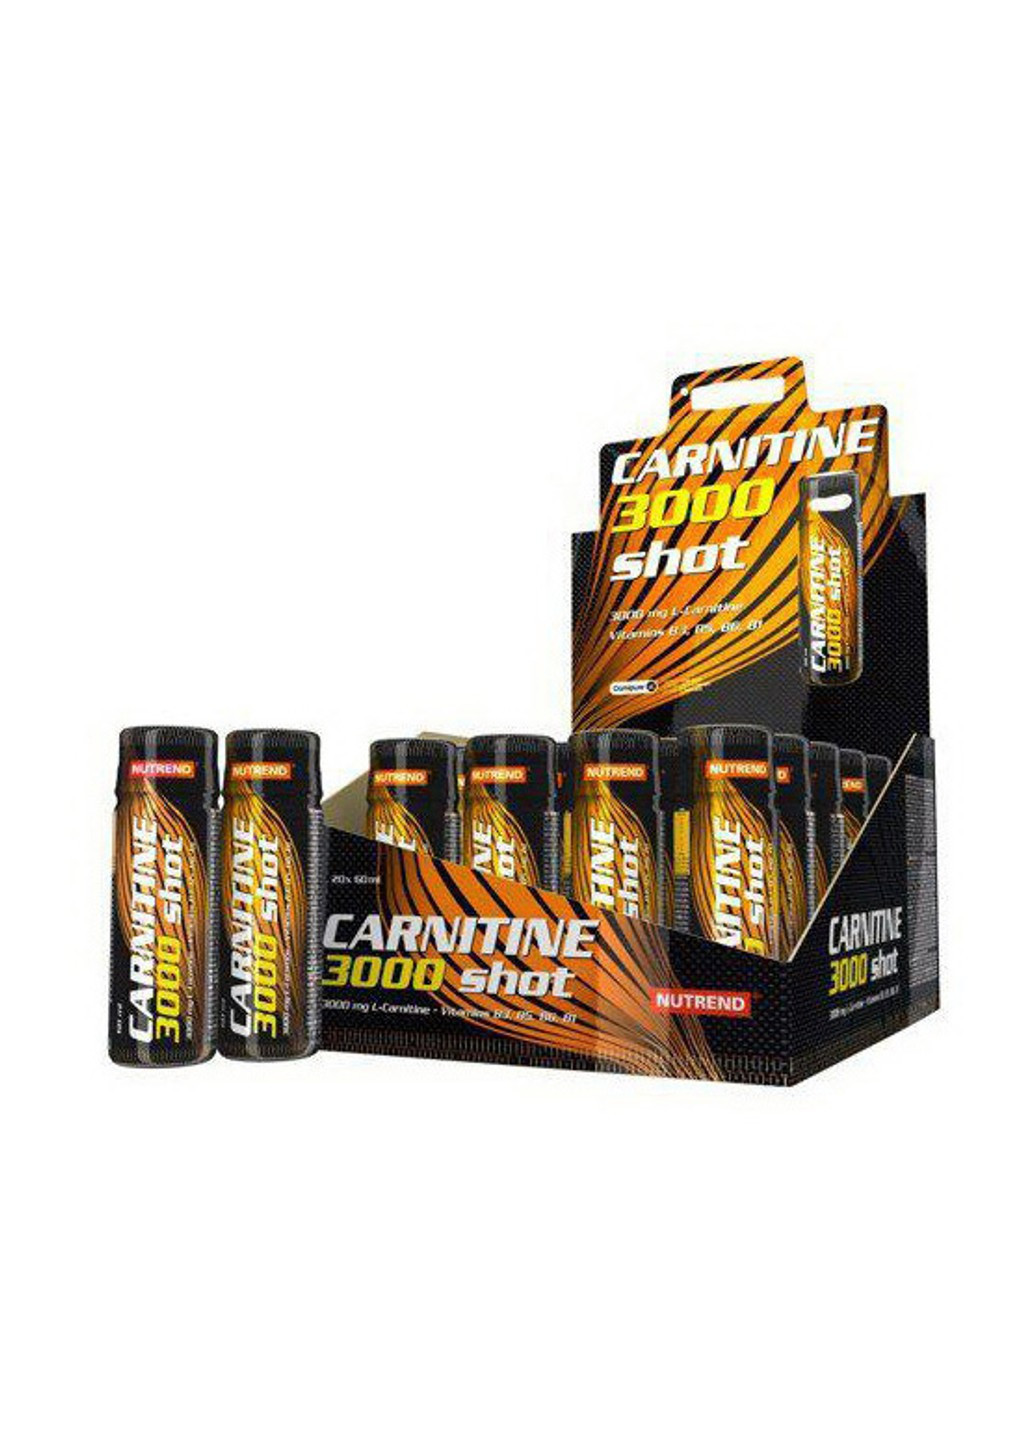 Л-карнітин Carnitine 3000 Shot 20 х 60 мл Апельсин Nutrend (255362095)